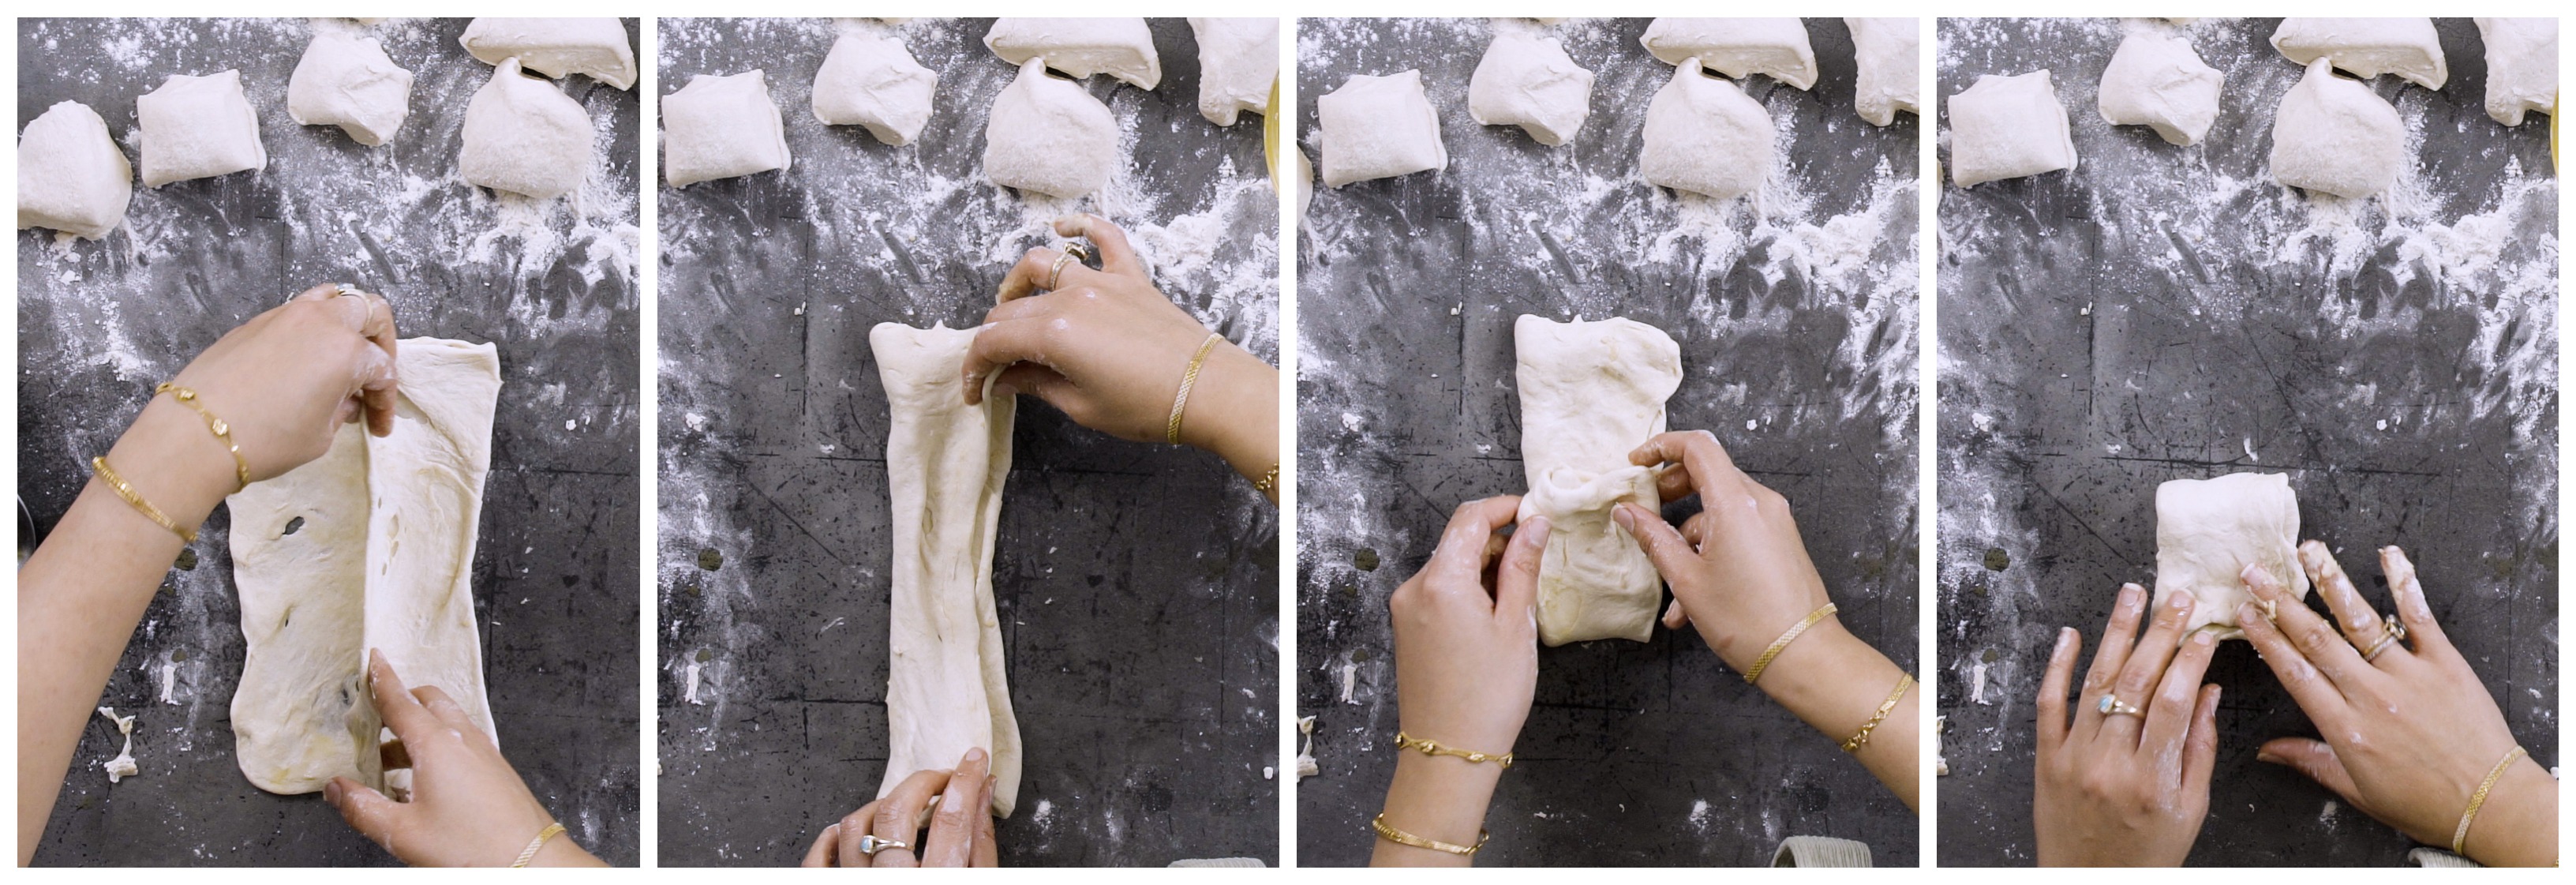 Folding dough